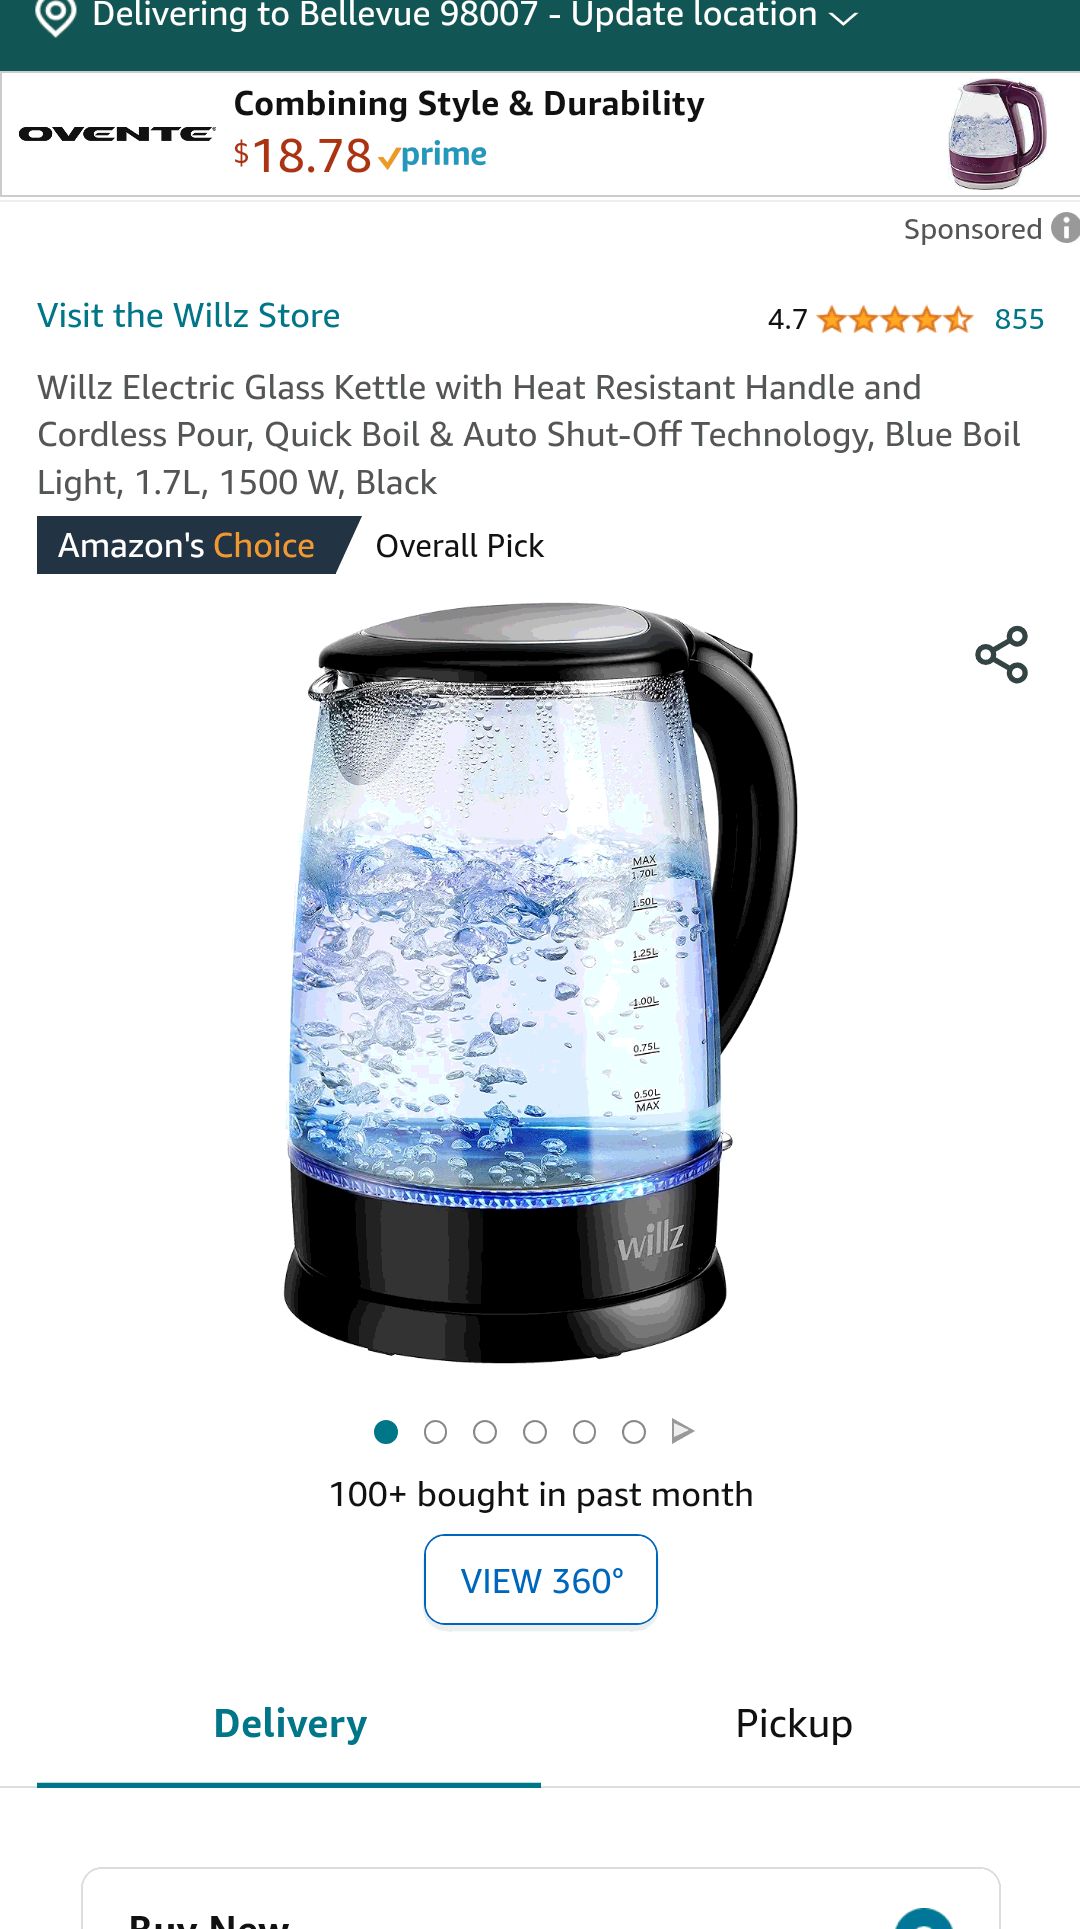 Willz Electric Glass Kettle with Heat Resistant Handle and Cordless Pour, Quick Boil & Auto Shut-Off Technology, Blue Boil Light, 1.7L, 1500 W, Black: Home & Kitchen